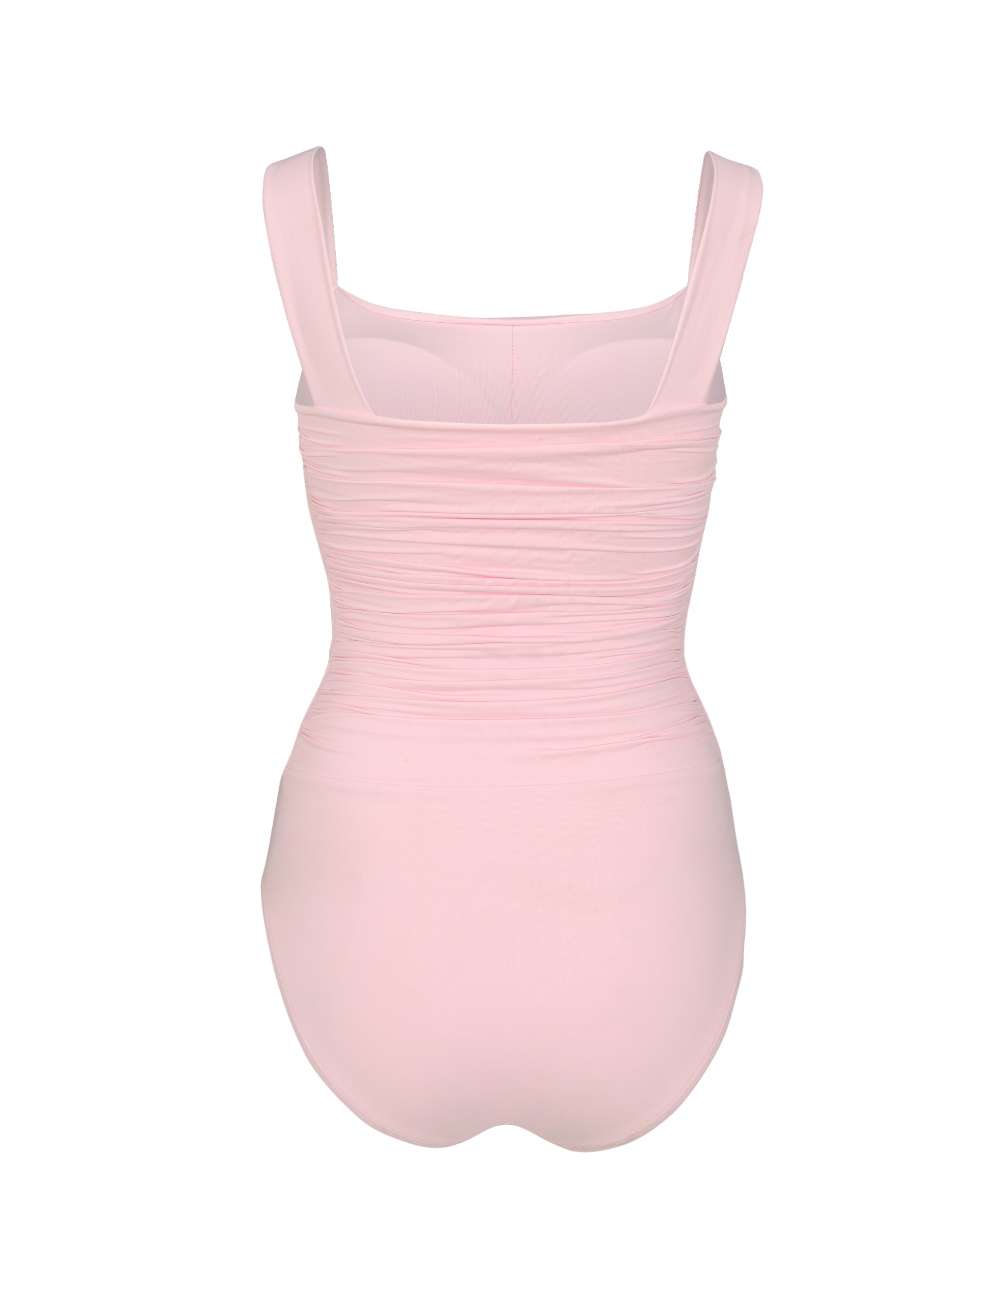 dress baby pink color image-S1L56